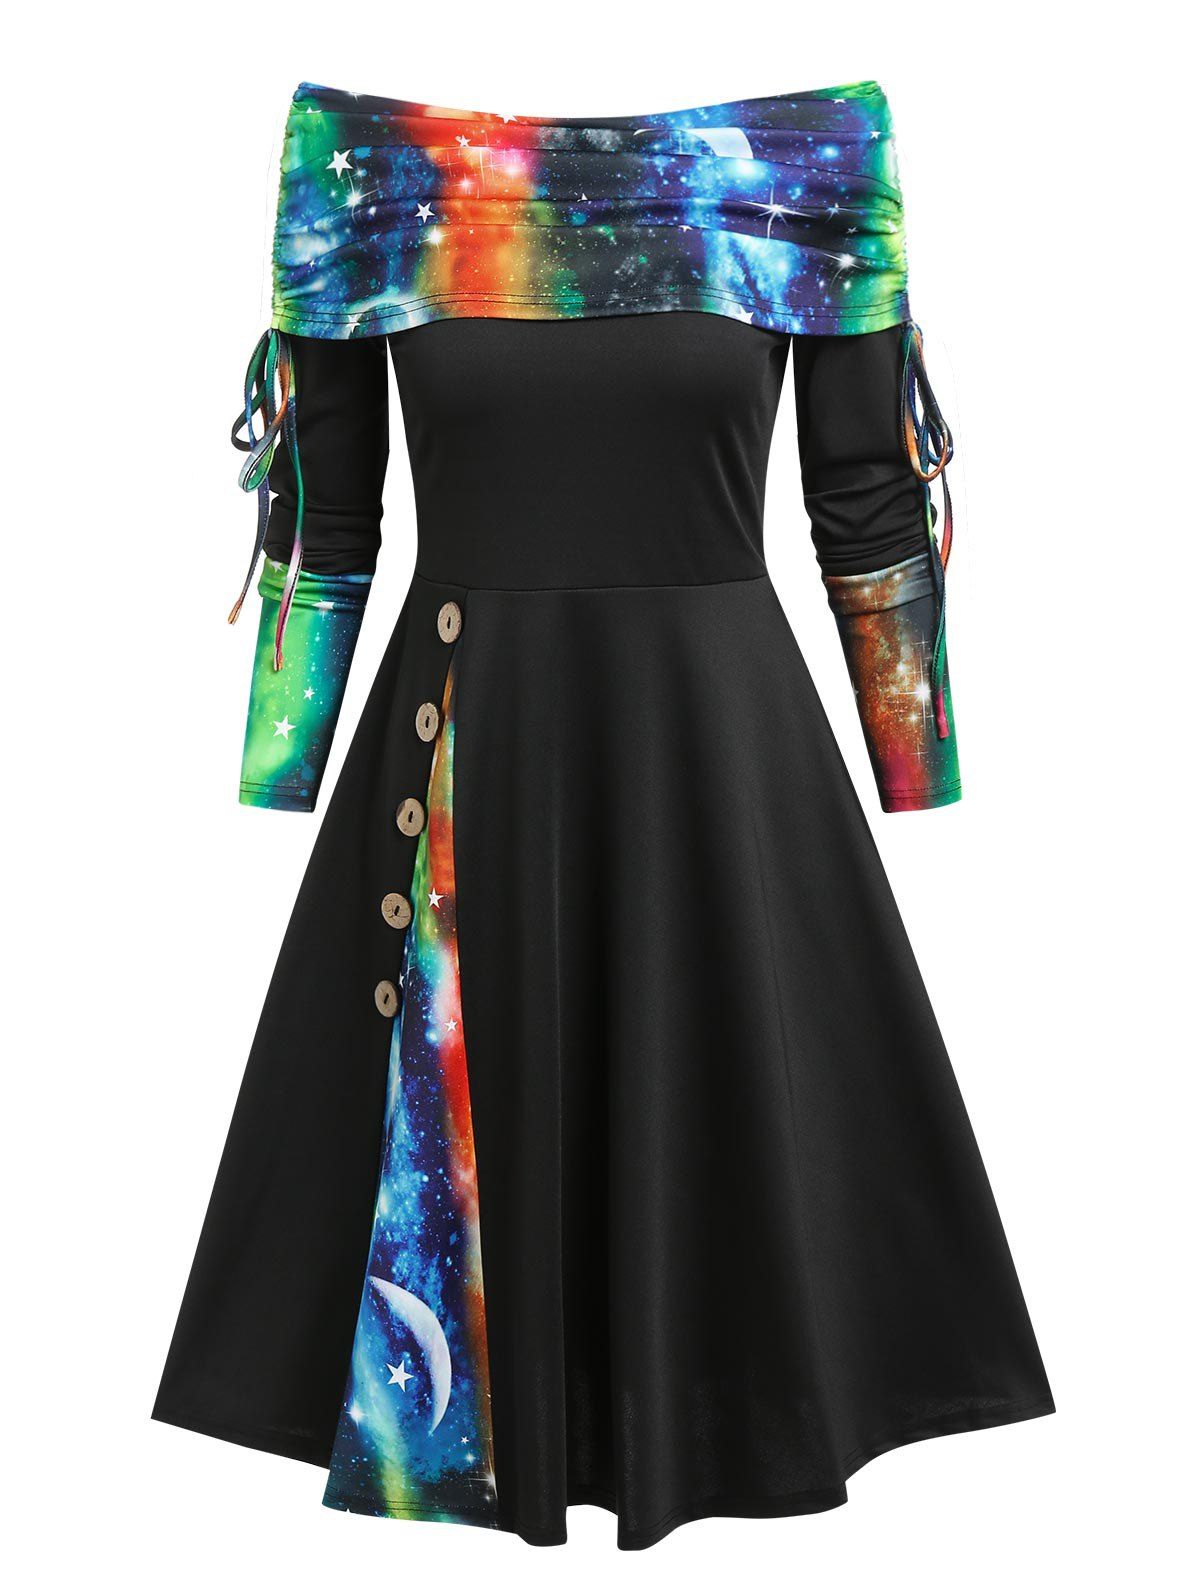 Cinched Off The Shoulder 3D Galaxy Print Dress - BLACK S